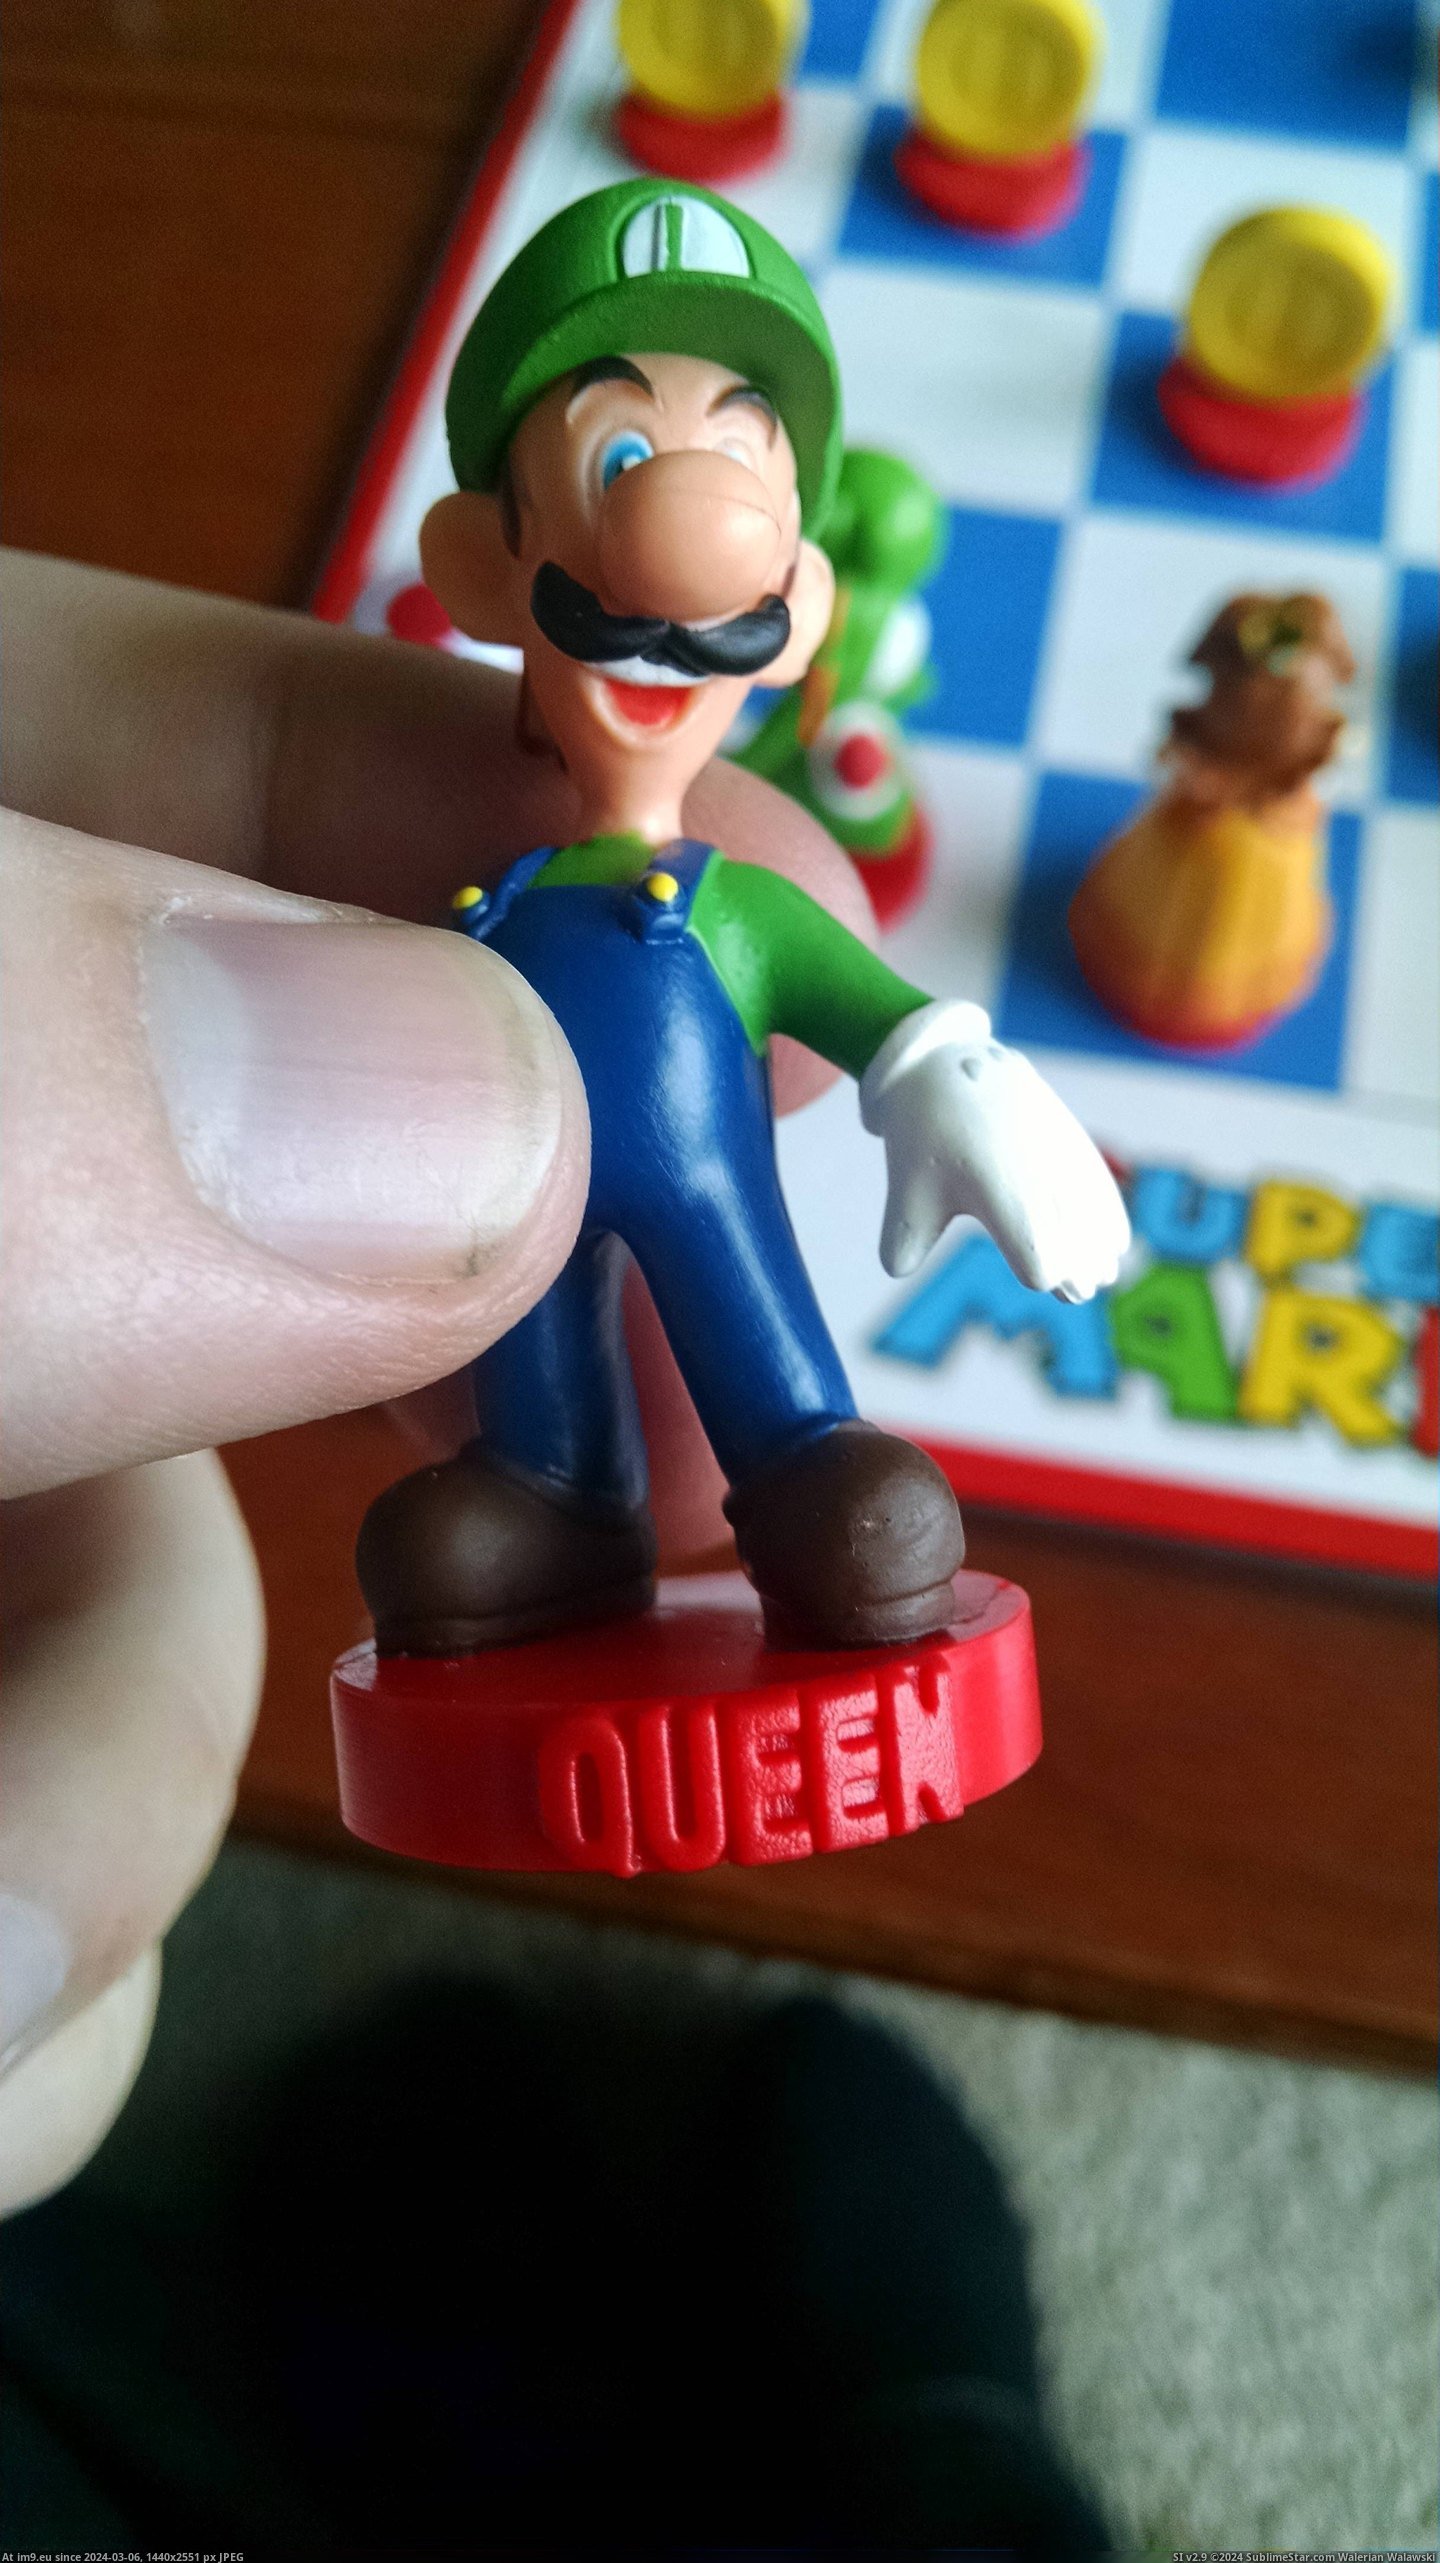 #Gaming #Sex #Poor #Chess #Luigi #Super #Mario [Gaming] Super Mario chess set. Poor Luigi... Pic. (Bild von album My r/GAMING favs))